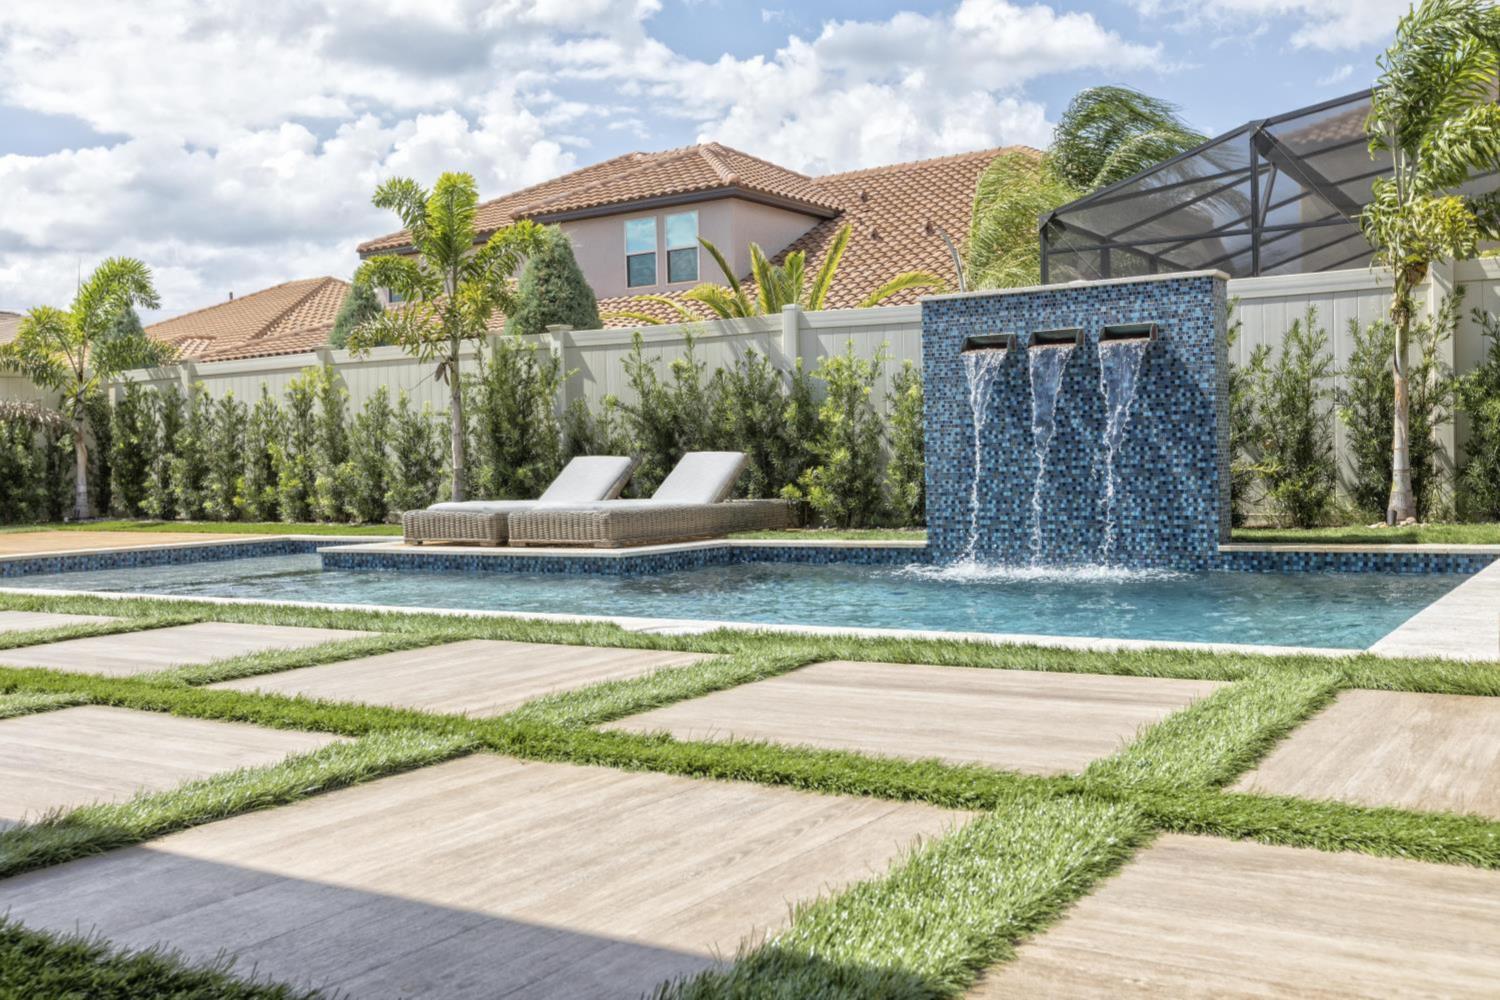 4 Pool Stylish Modern Outdoor Solar Rockface Water Feature 